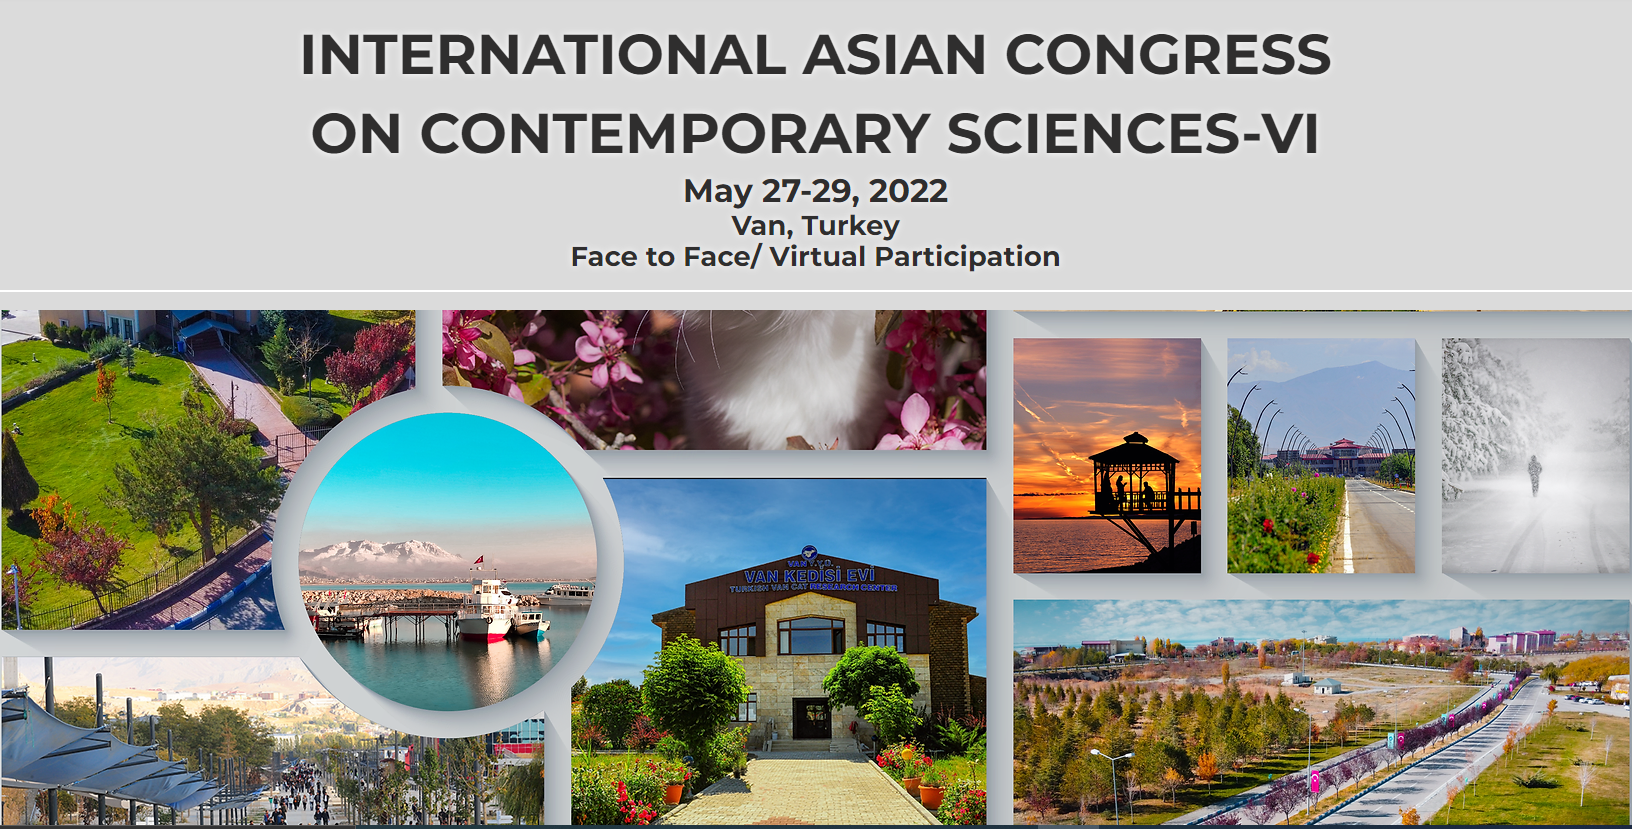 6. International Asian Congress on Contemporary Sciences